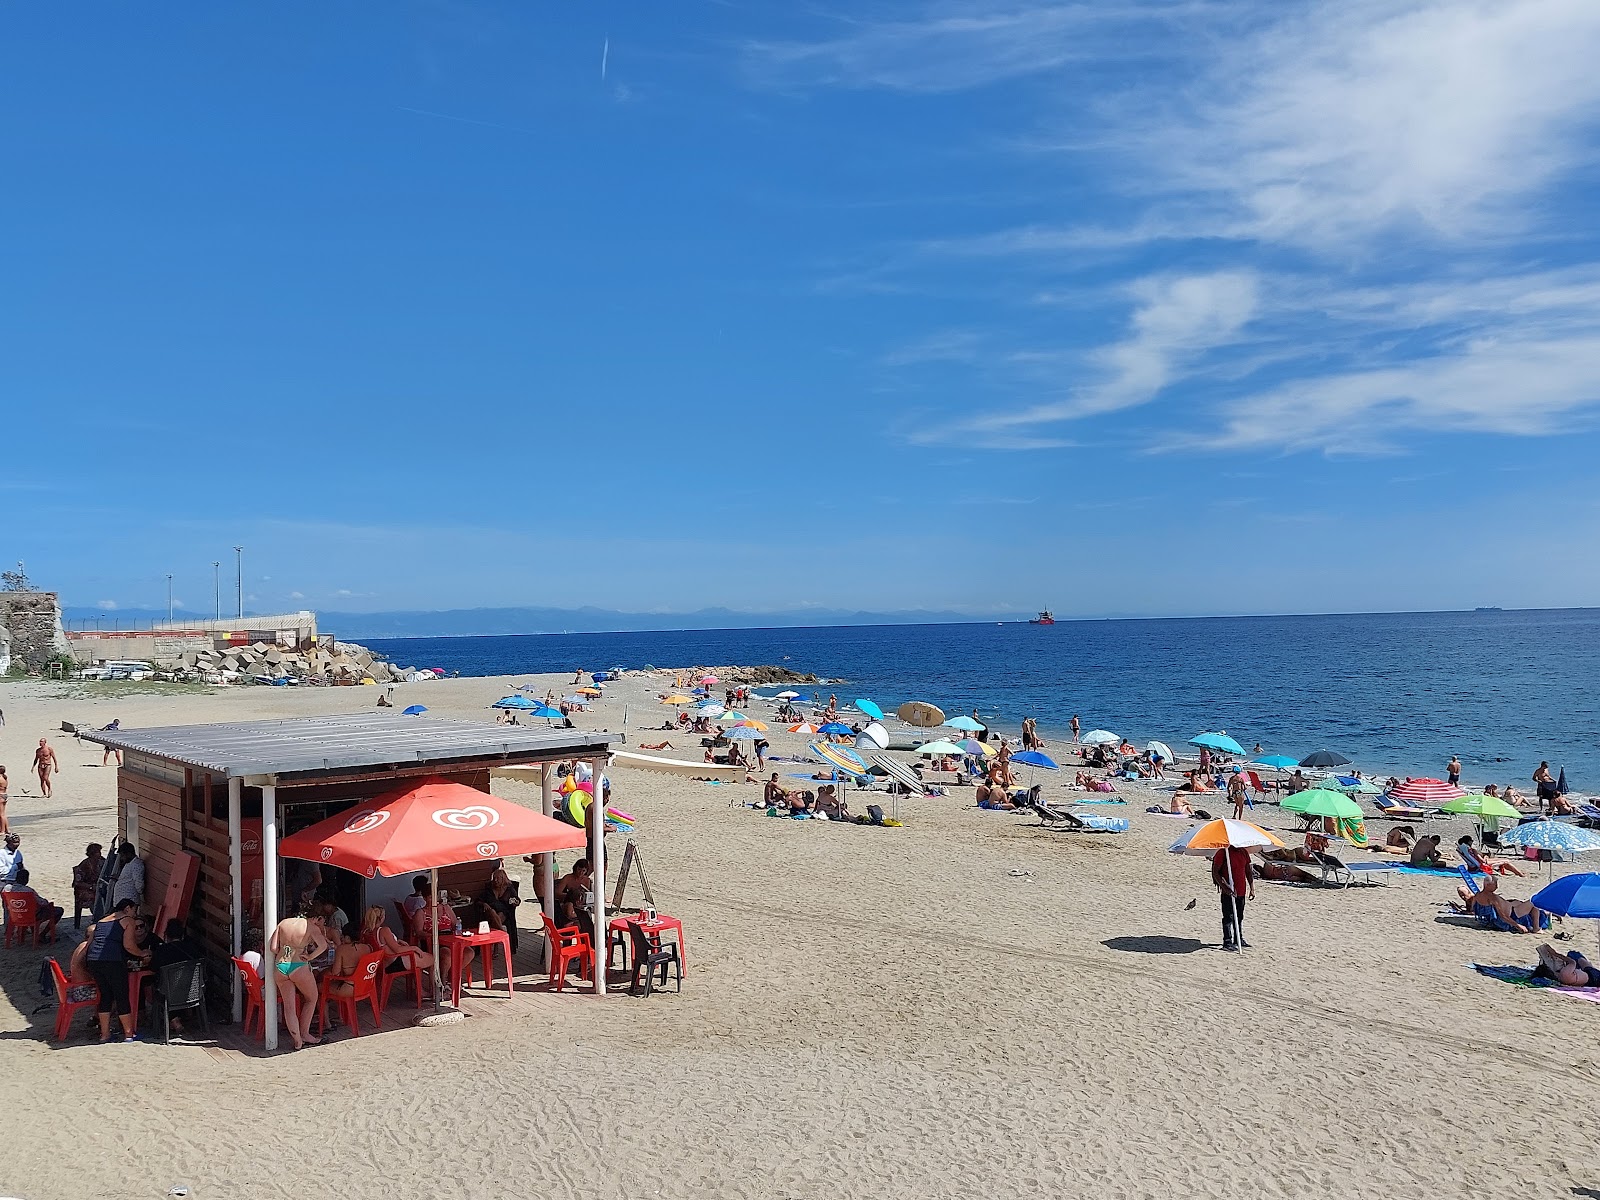 Spiaggia Libera del Prolungamento'in fotoğrafı parlak kum yüzey ile